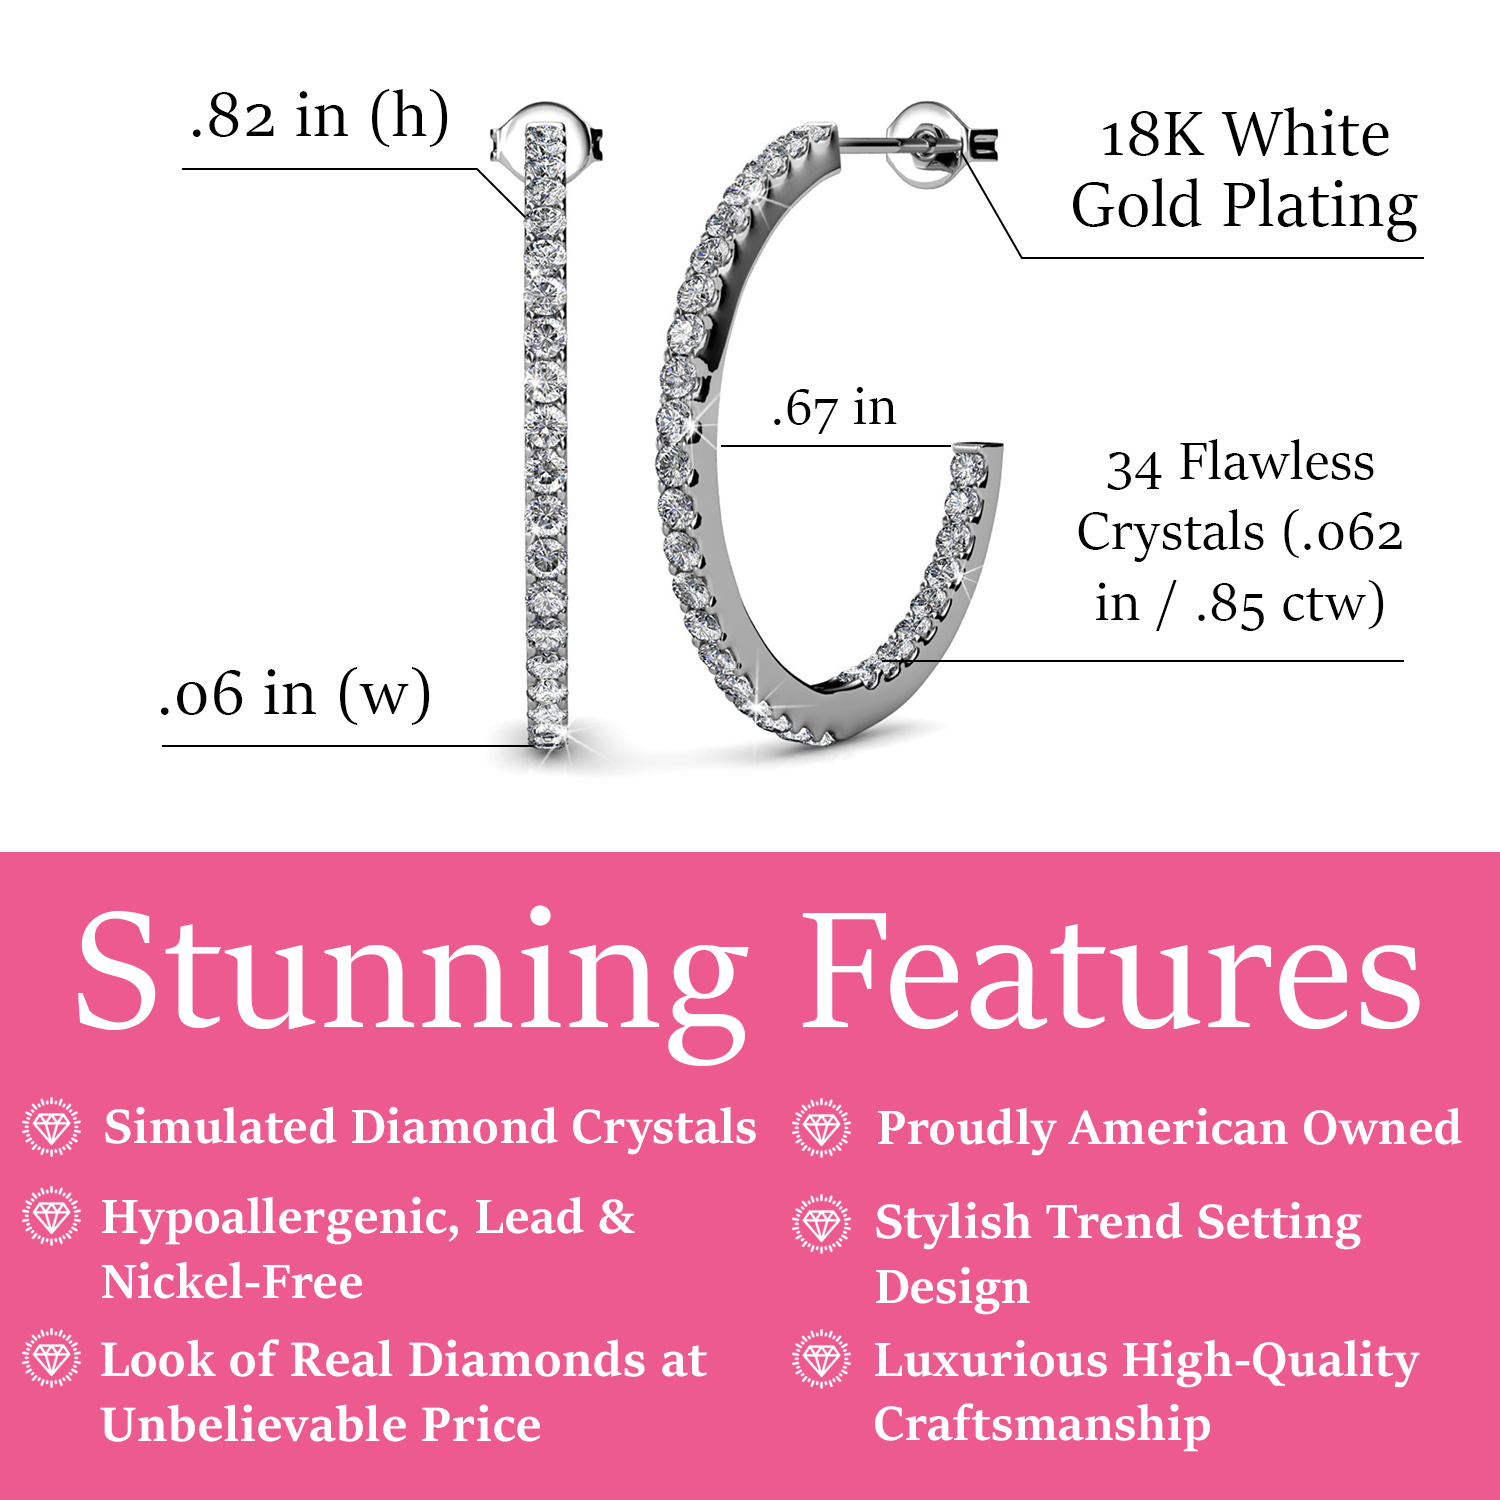 Cate & Chloe Rosalyn 18k White Gold Plated Silver Hoop Earrings | Women's Crystal Earrings | Jewelry Gift for Her - image 2 of 9